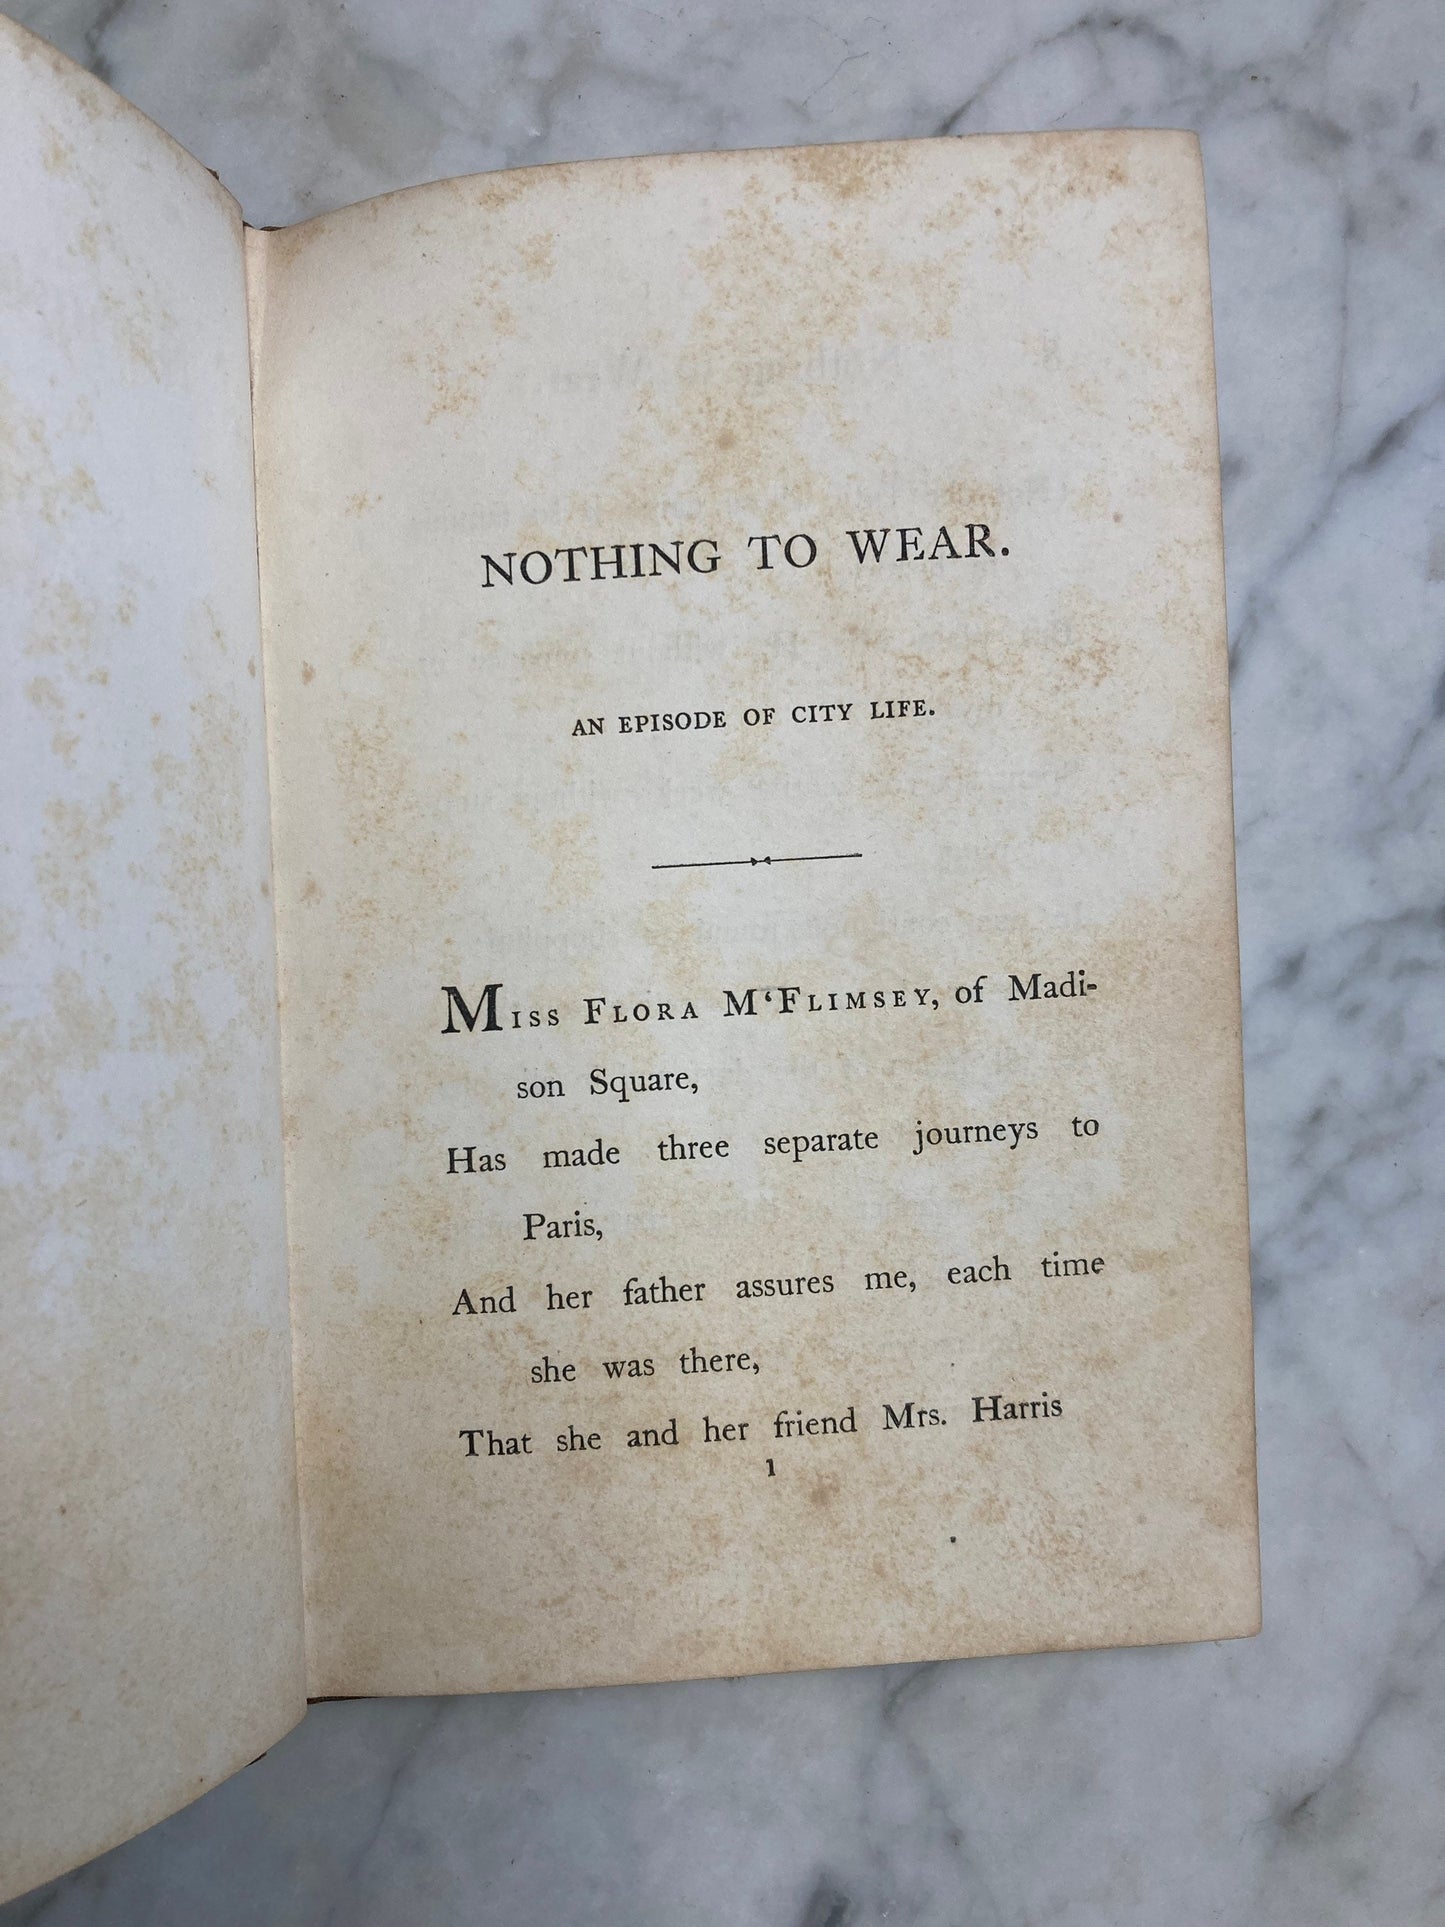 Victorian Satirical Poem - “Nothing to Wear”